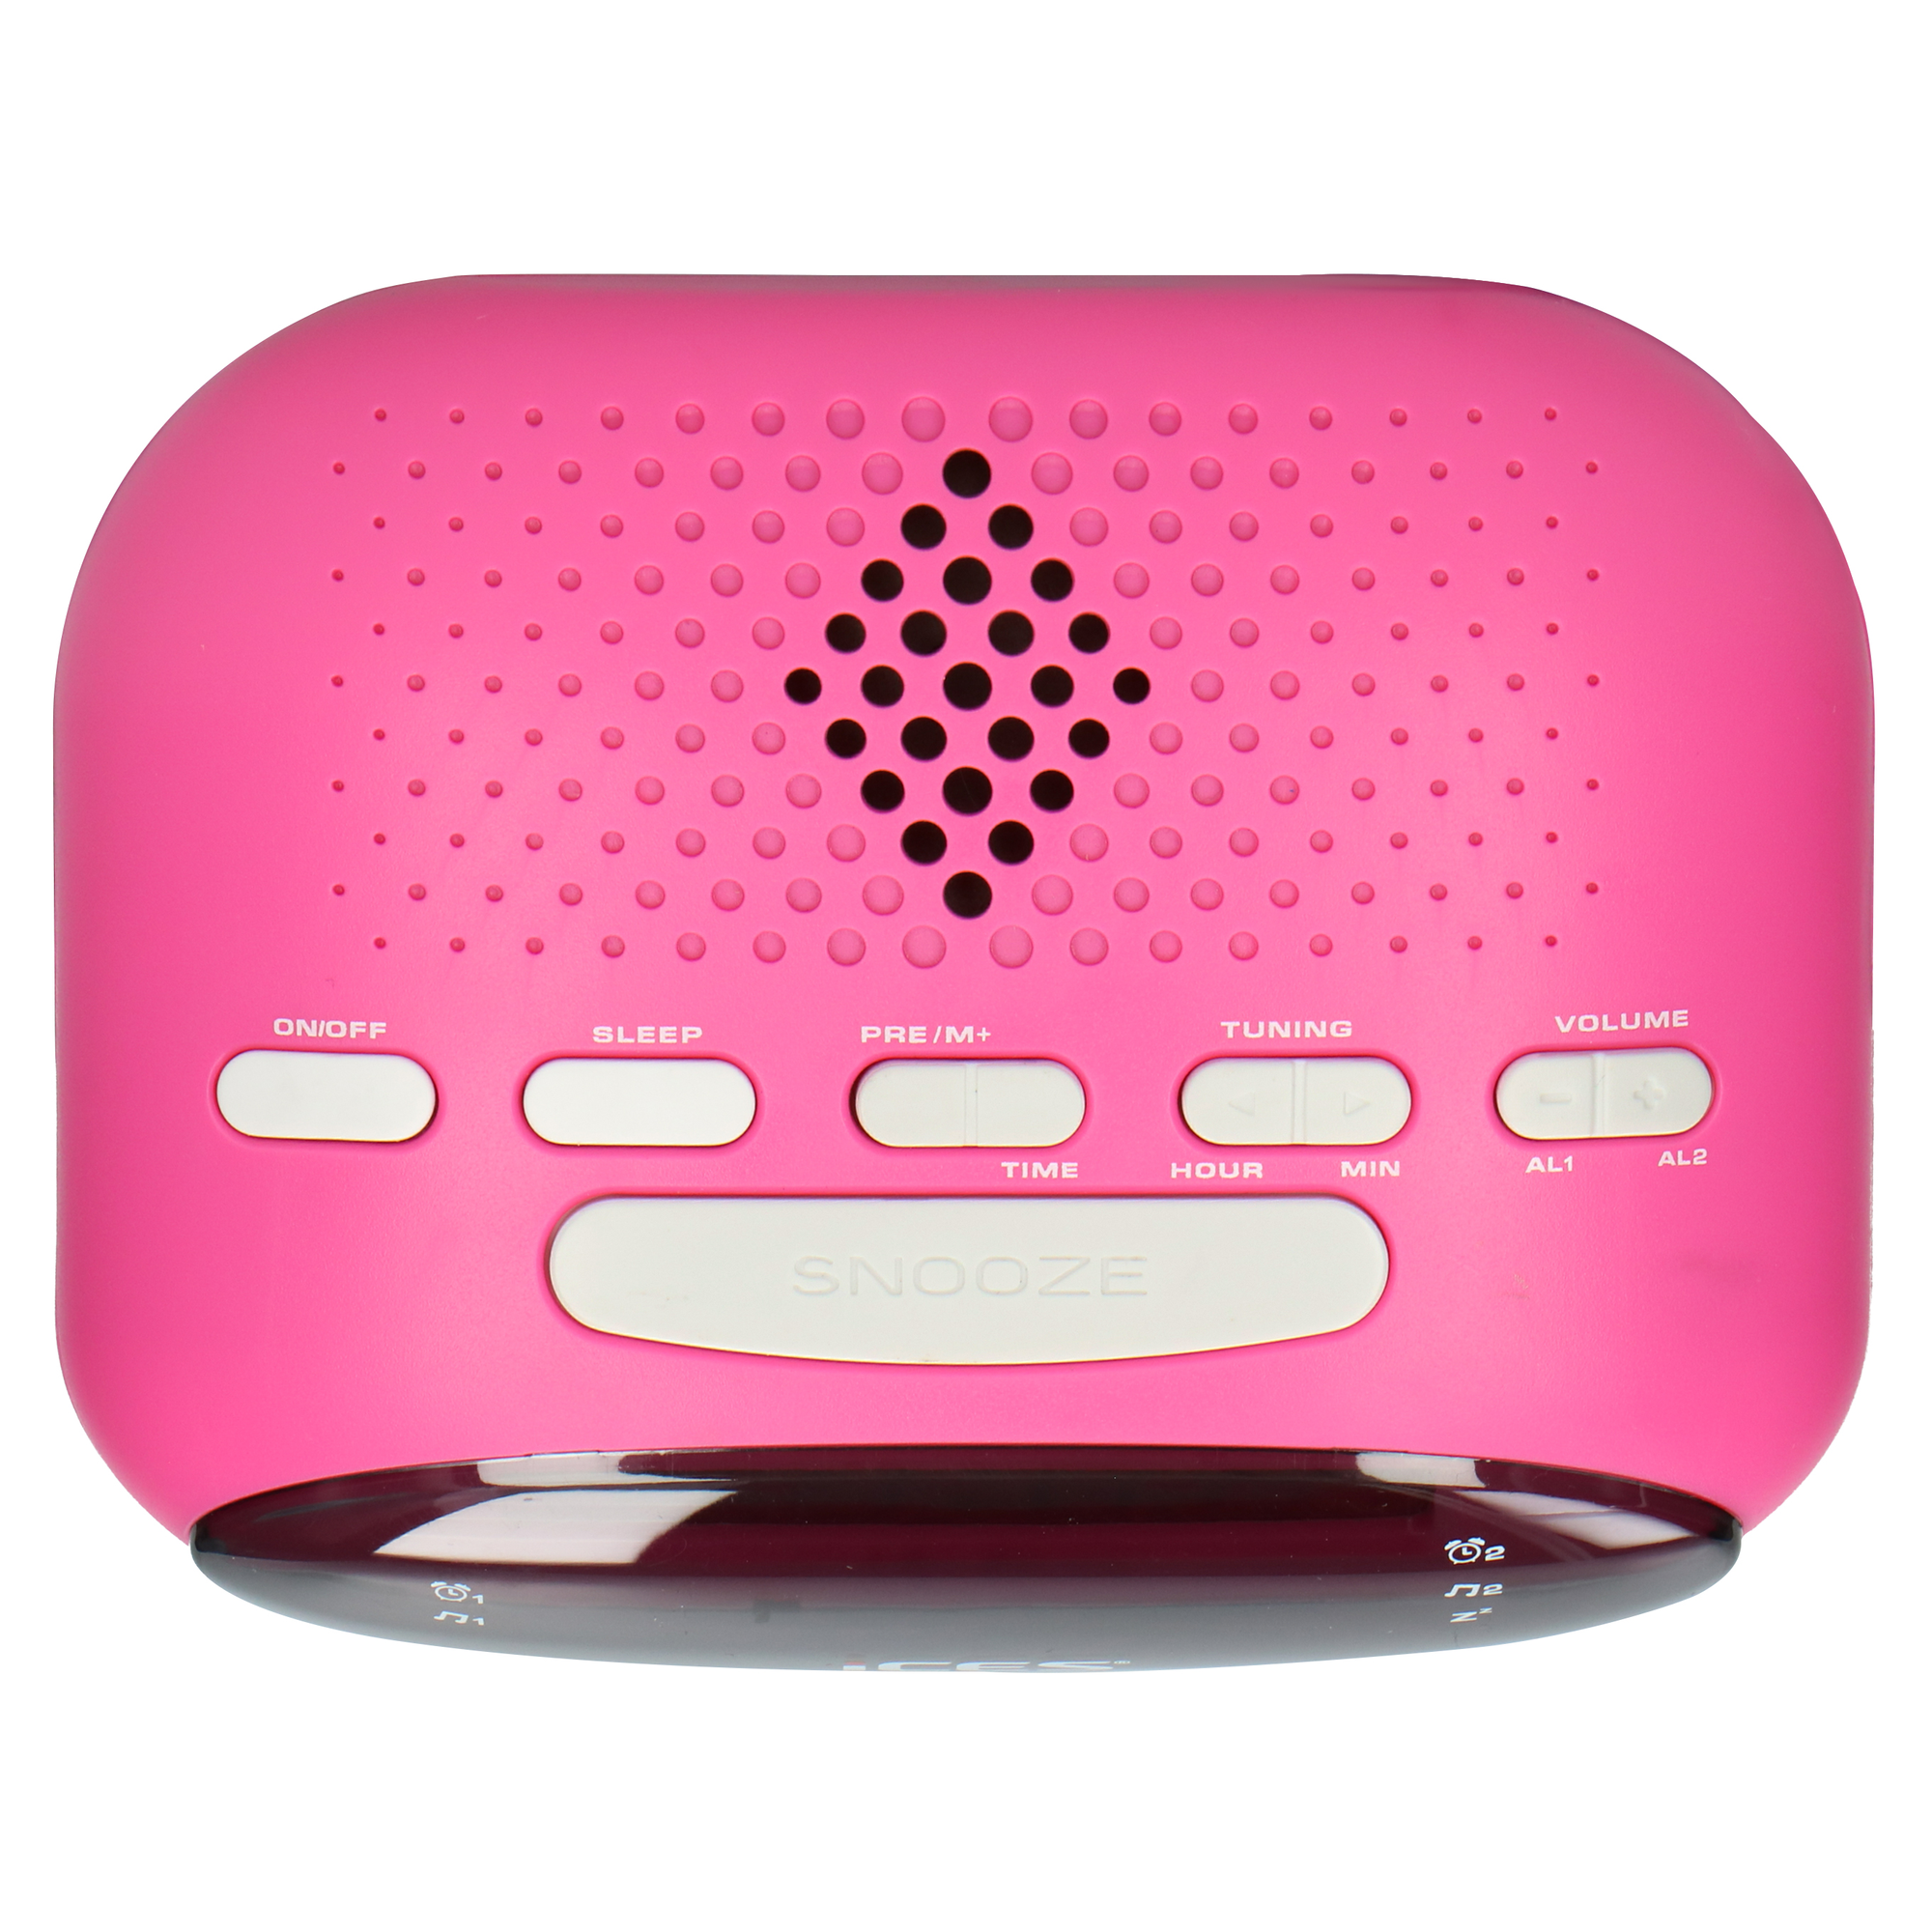 ICES FM, ICR-210 Pink Pink Radiowecker,